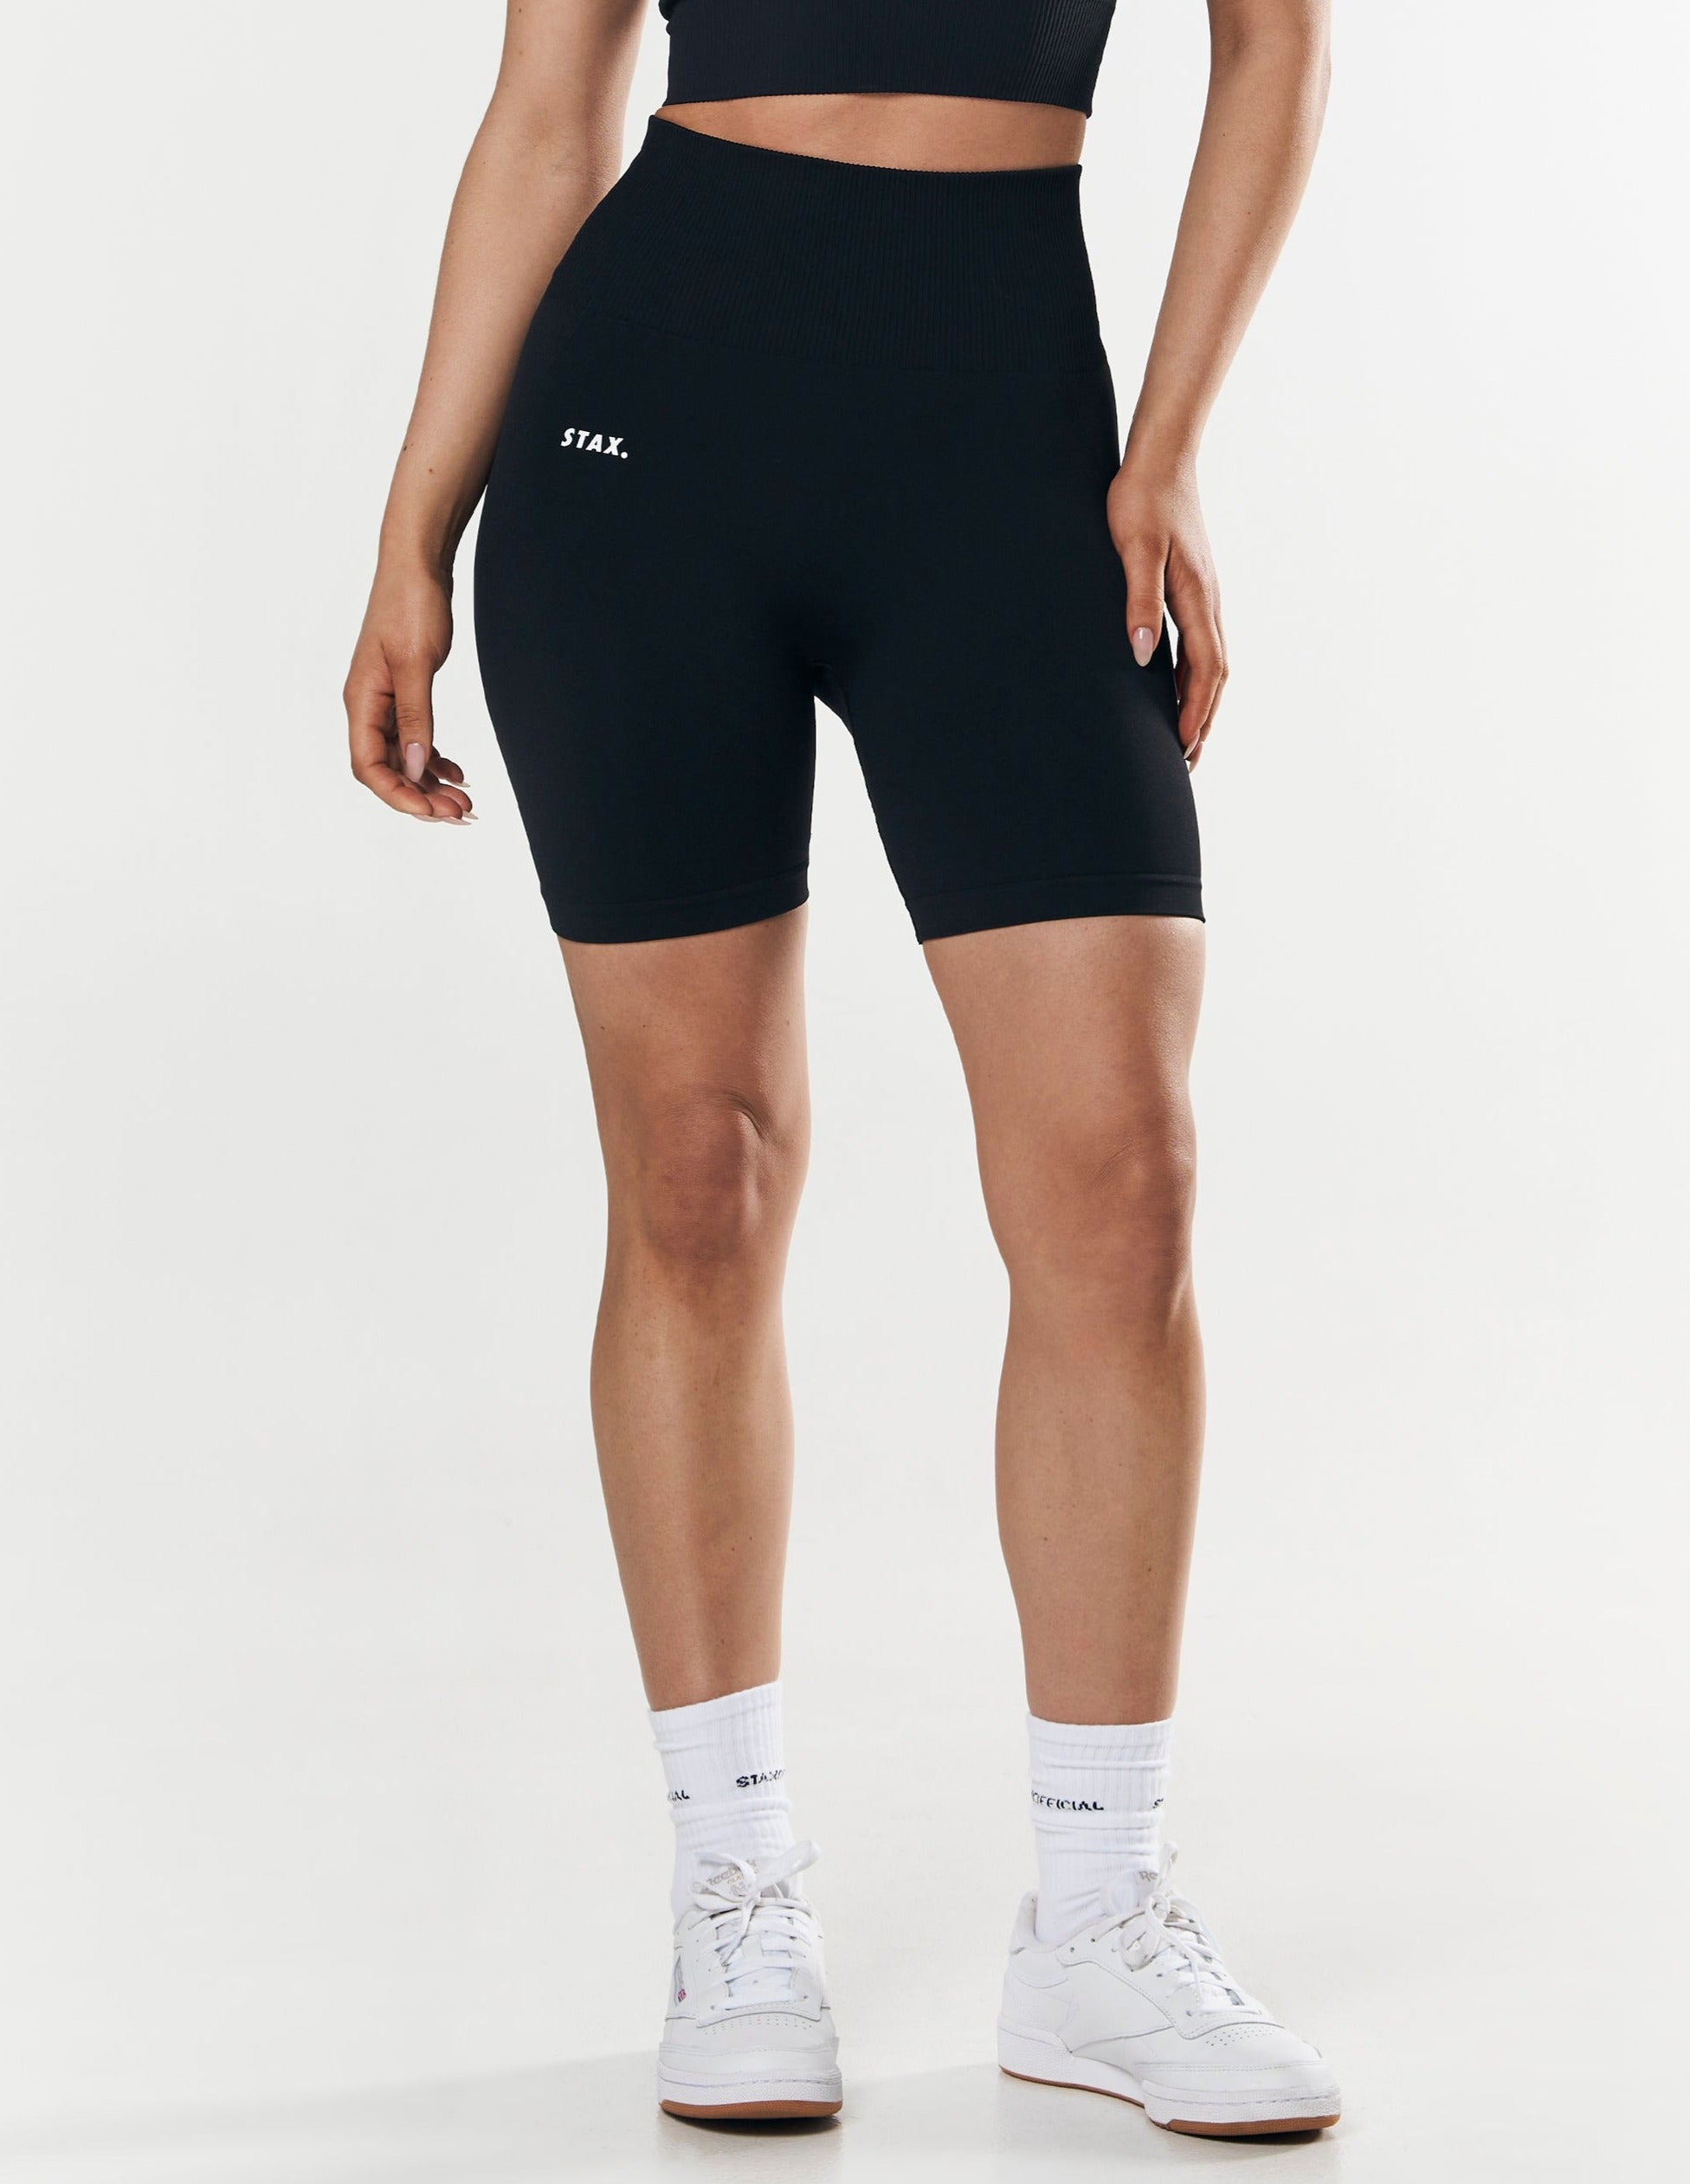 stax-ps-midi-bike-shorts-black